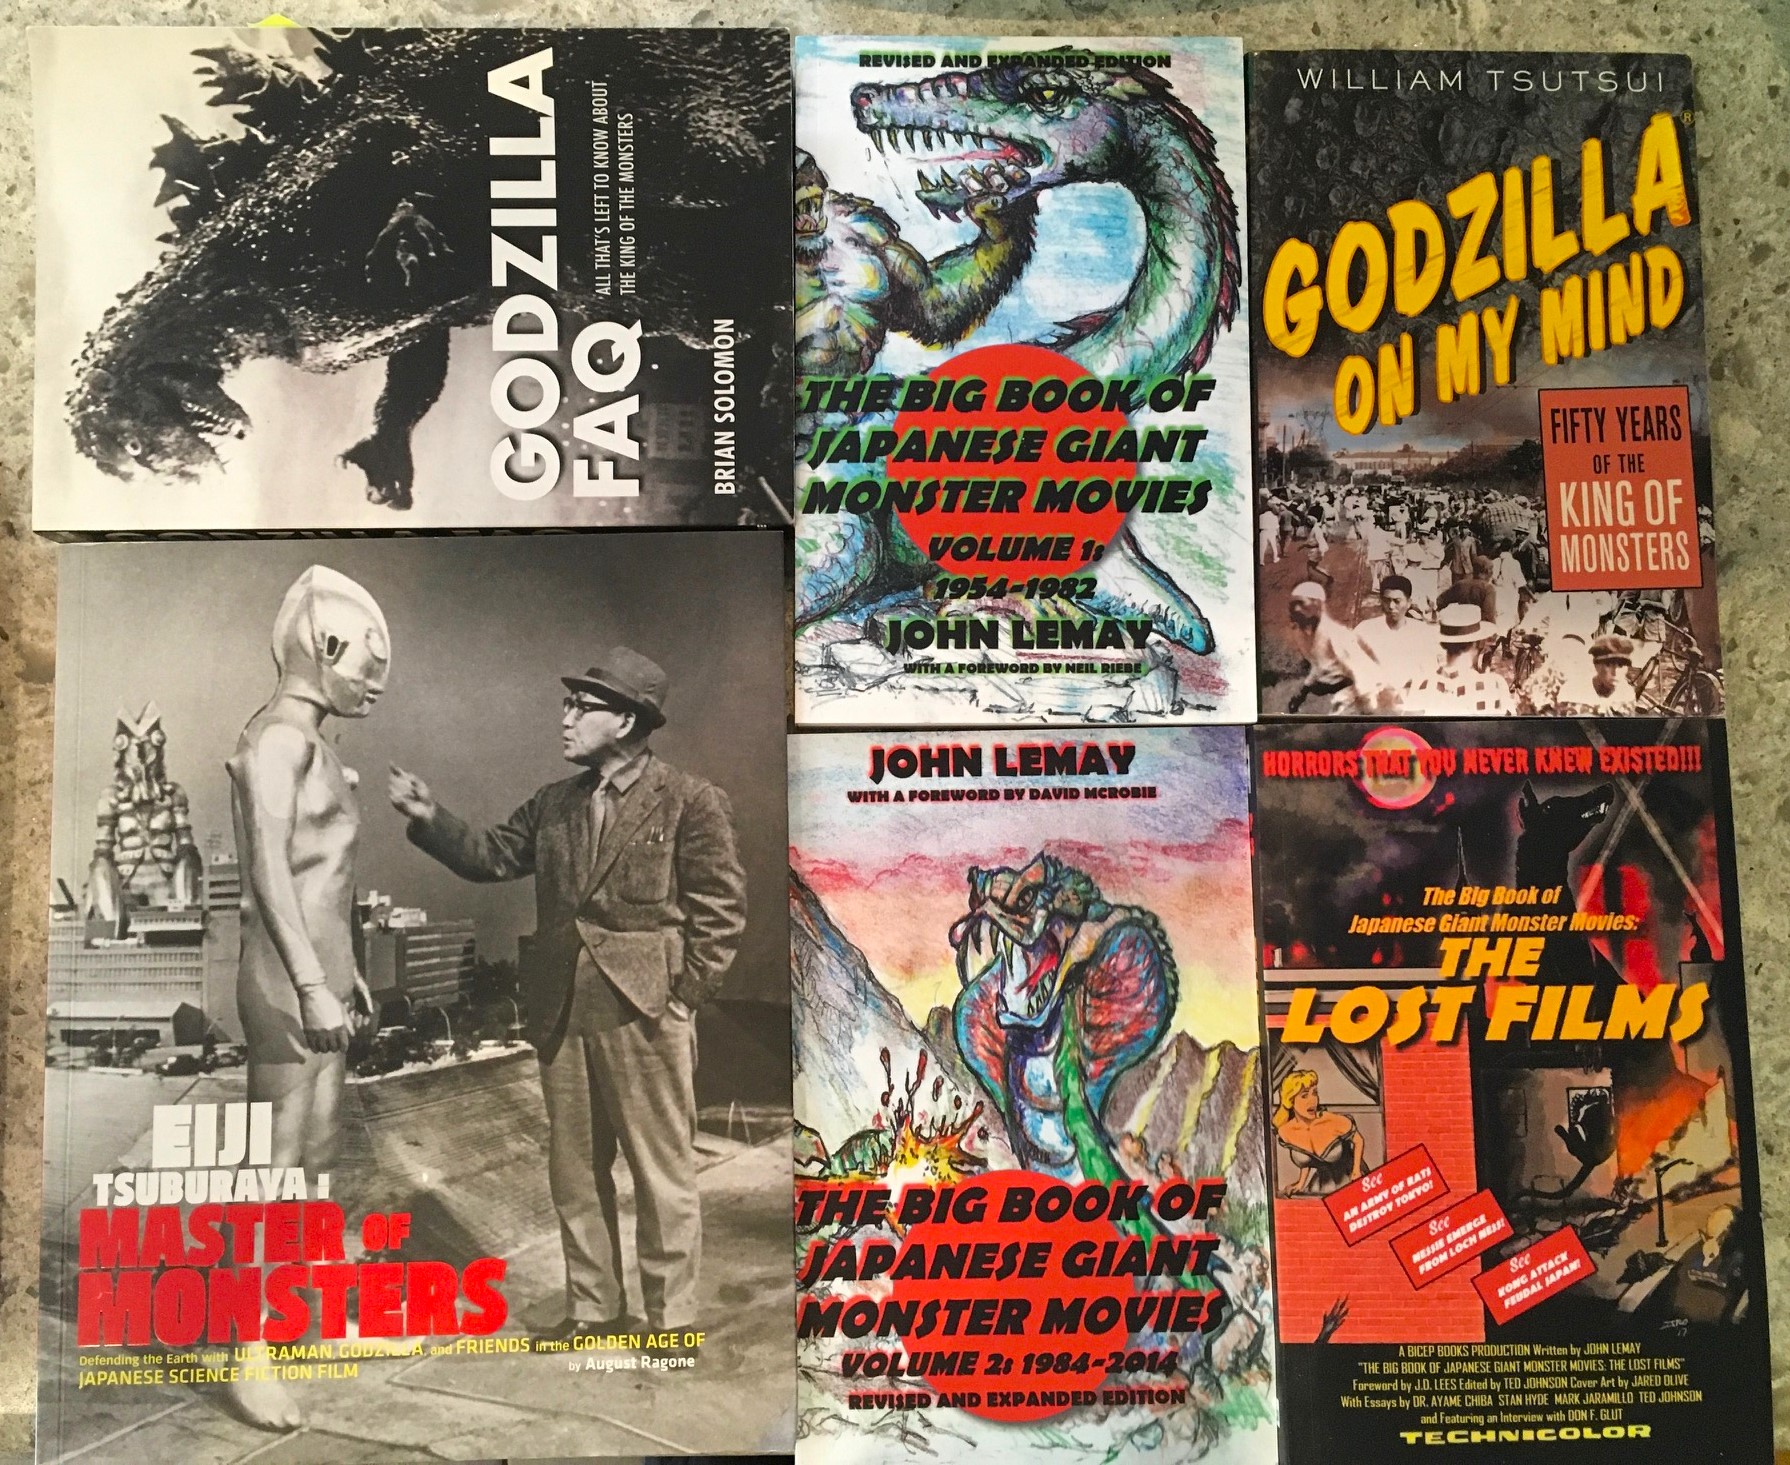 Godzilla books again